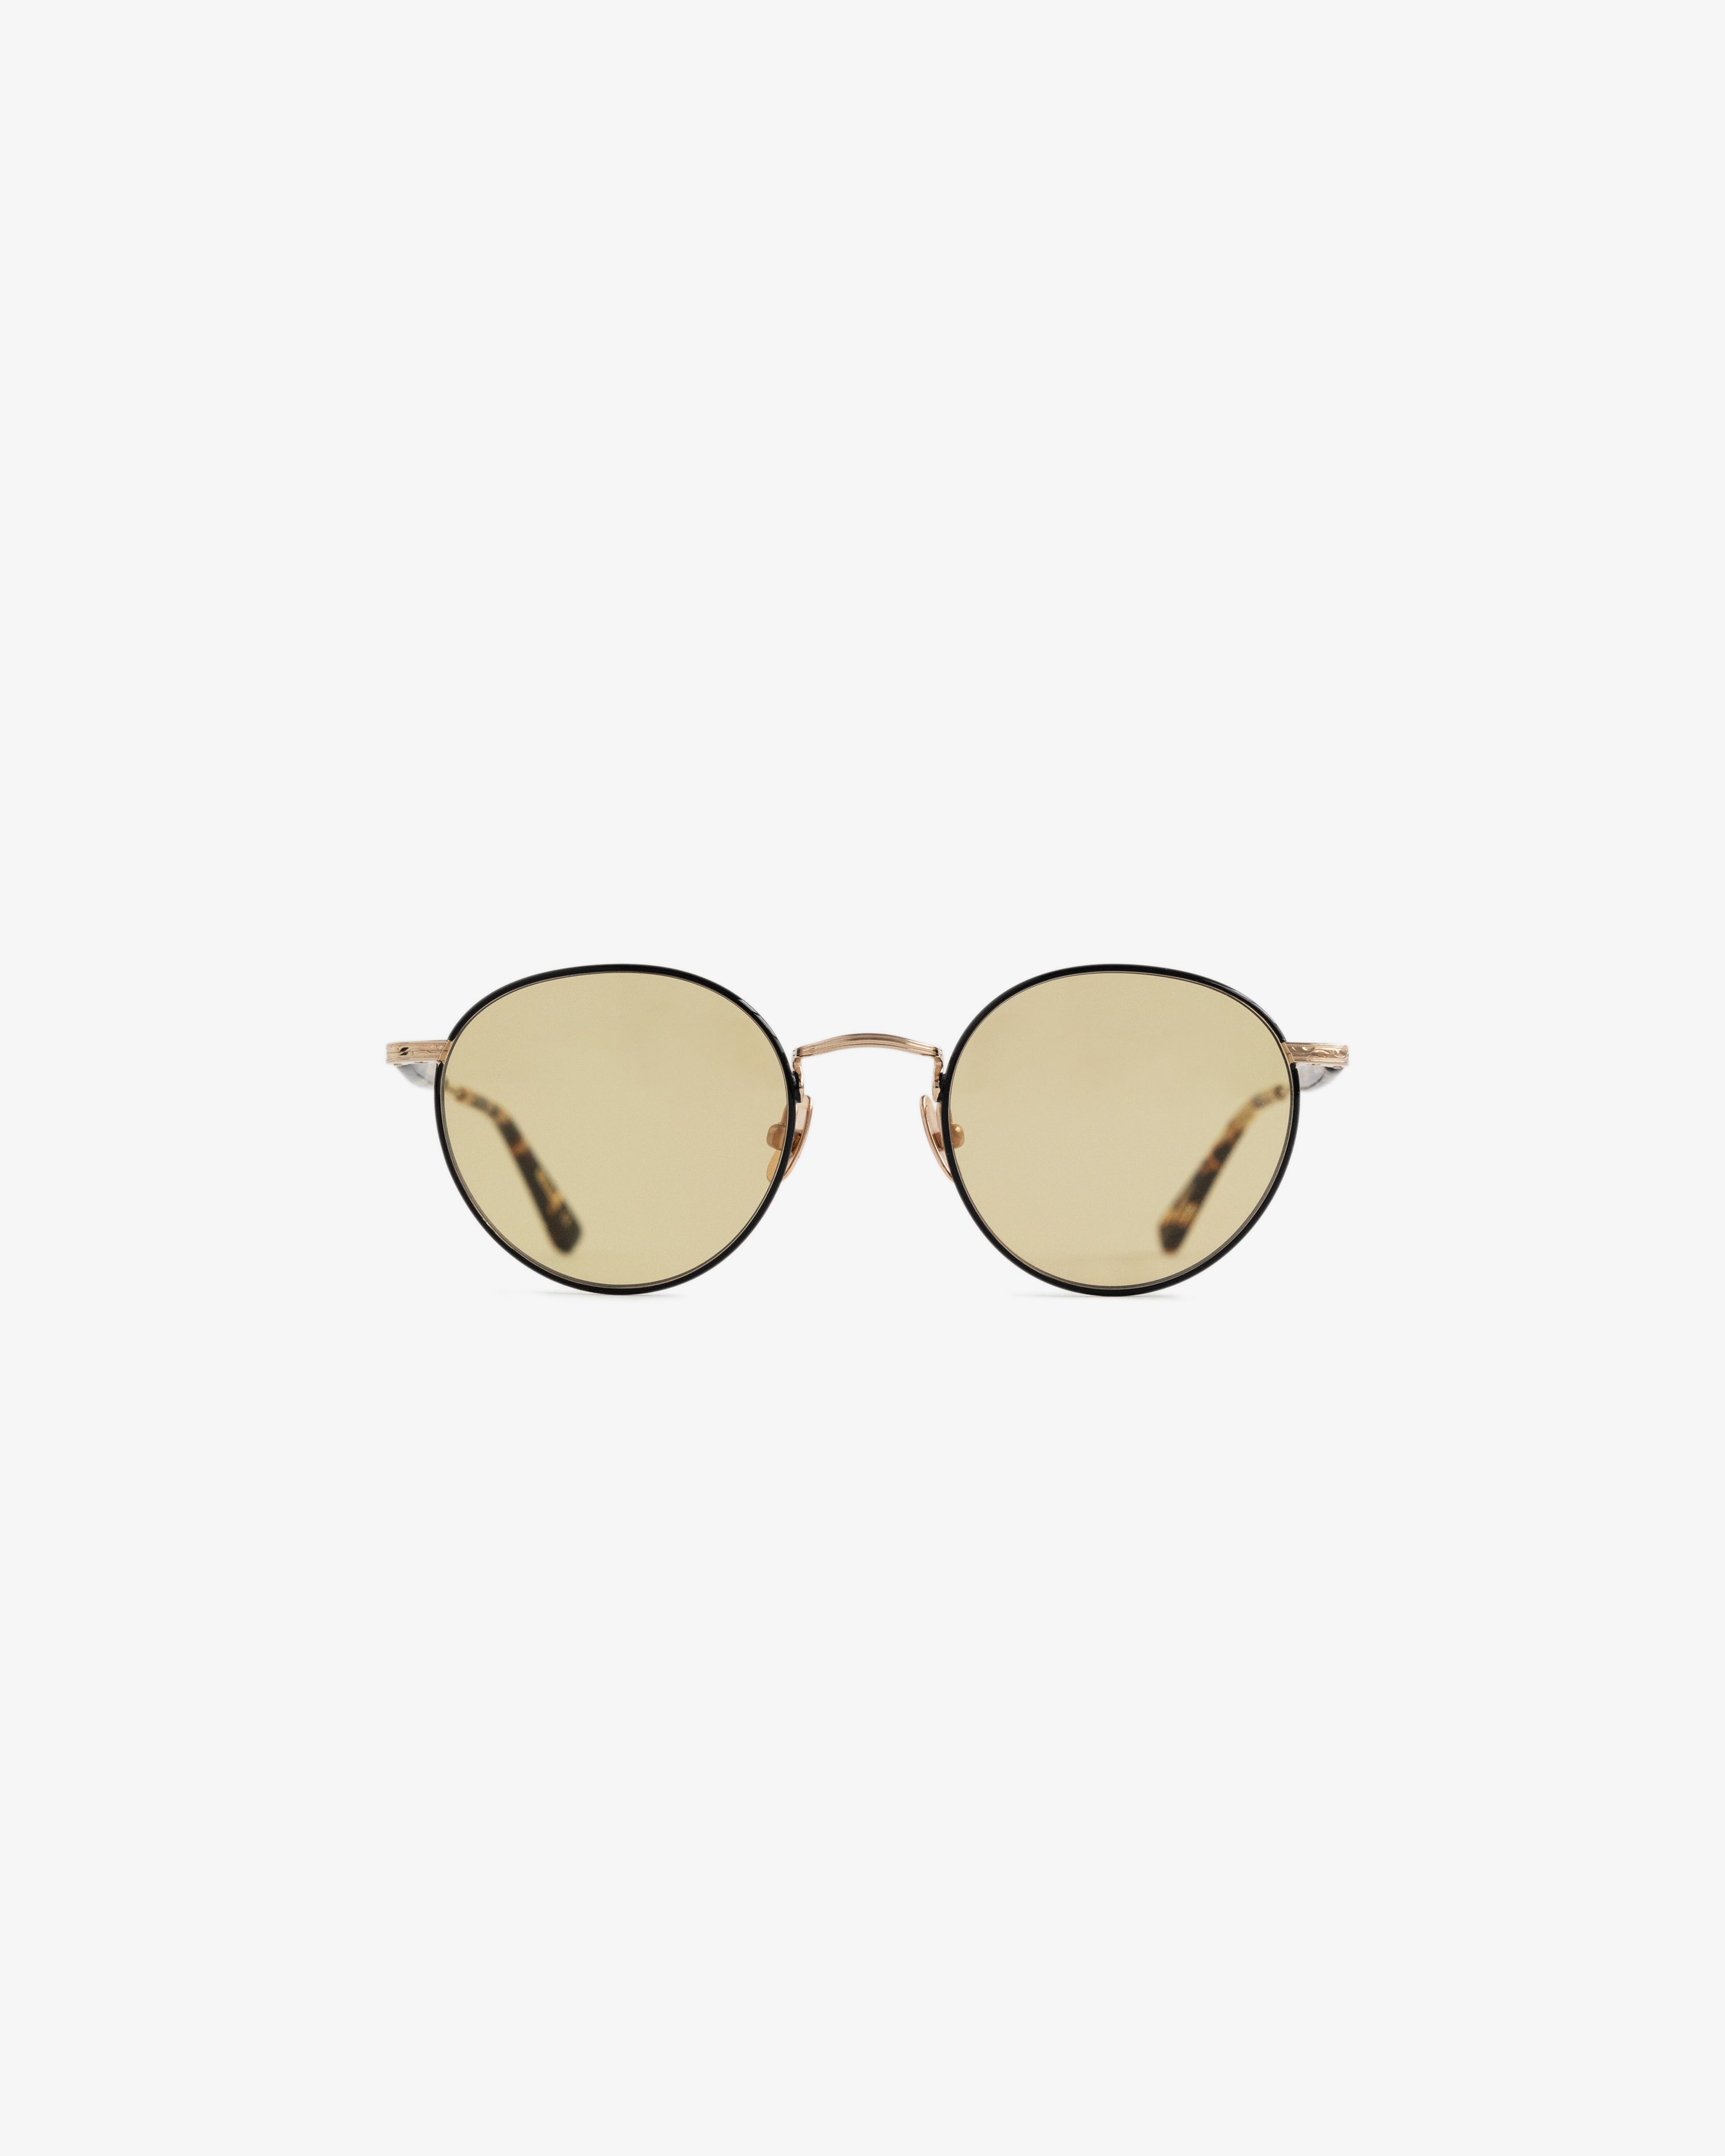 Coppola Sunglasses